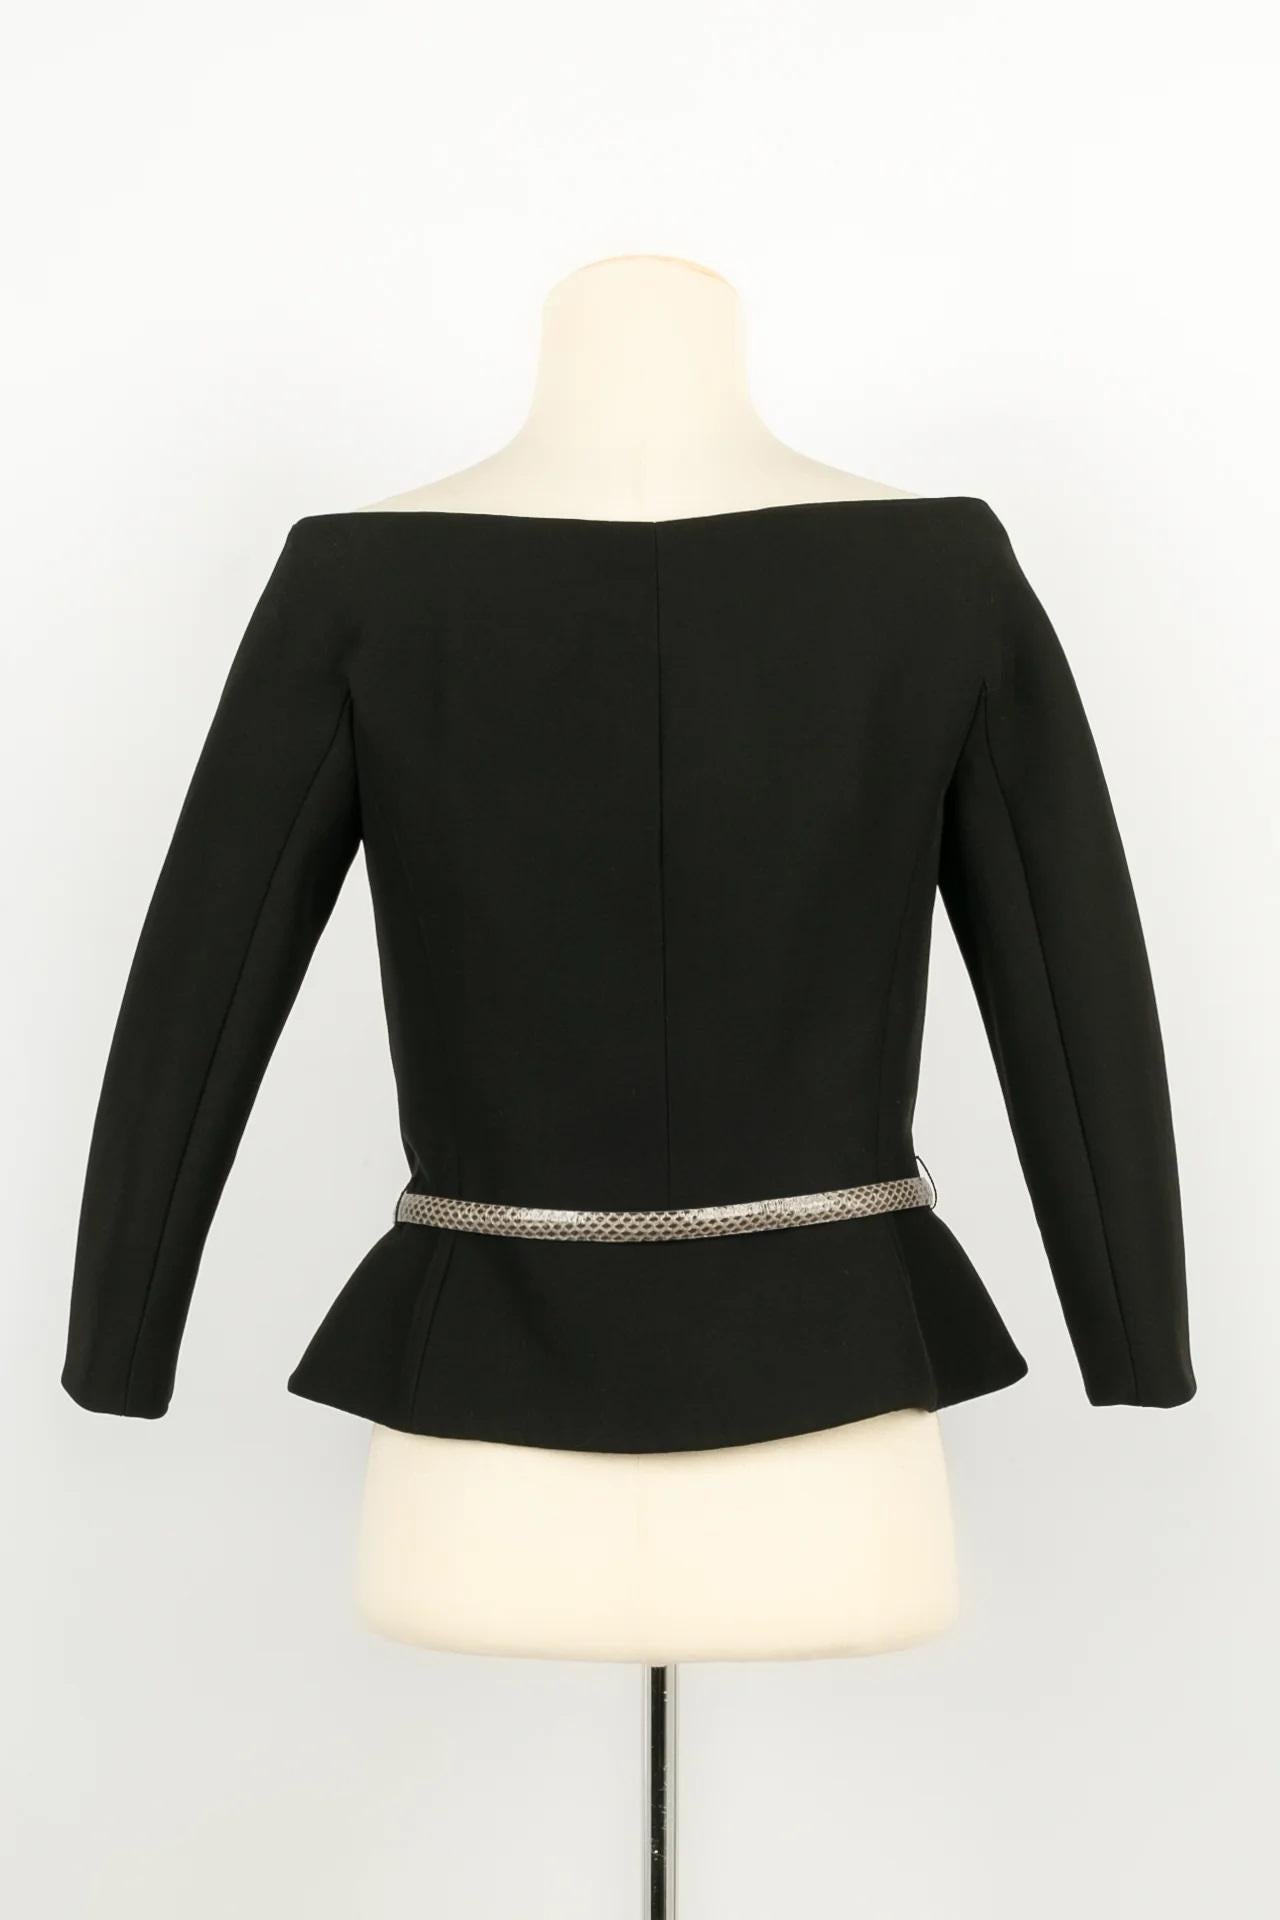 Dior Christian Asymmetrical Black Top In Excellent Condition For Sale In SAINT-OUEN-SUR-SEINE, FR